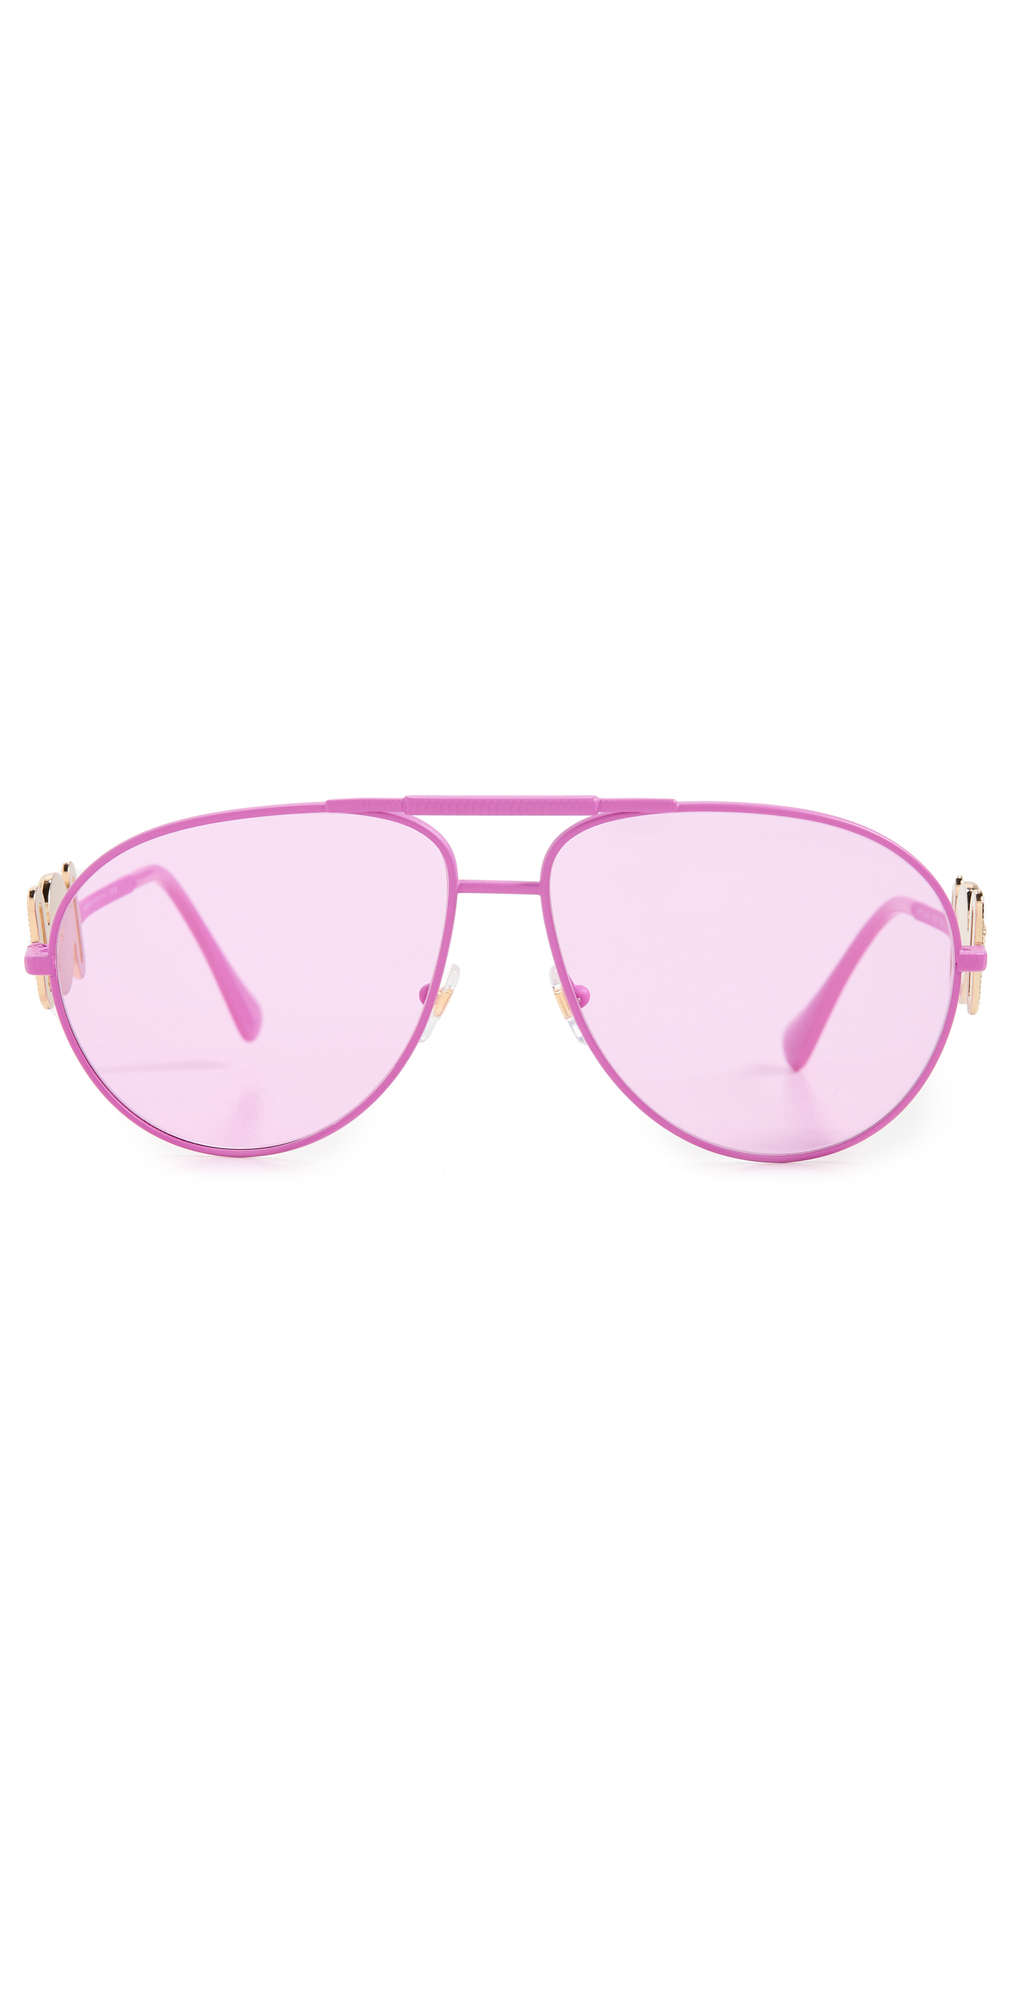 Versace Medusa Aviator Sunglasses in pink / fuchsia